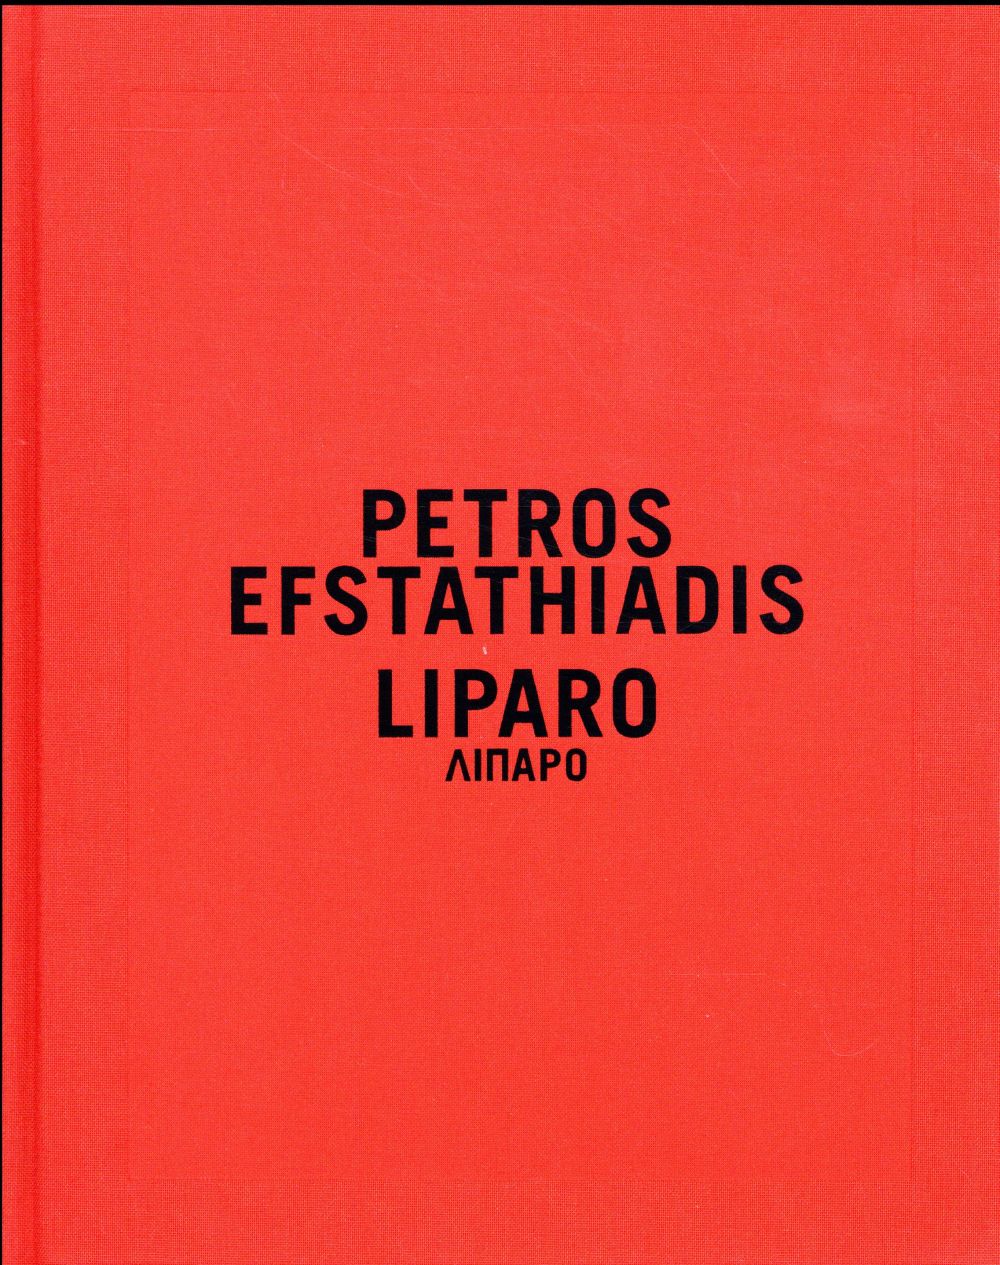 LIPARO - PRIX HSBC DE LA PHOTOGRAPHIE - PETROS EFSTATHIADIS